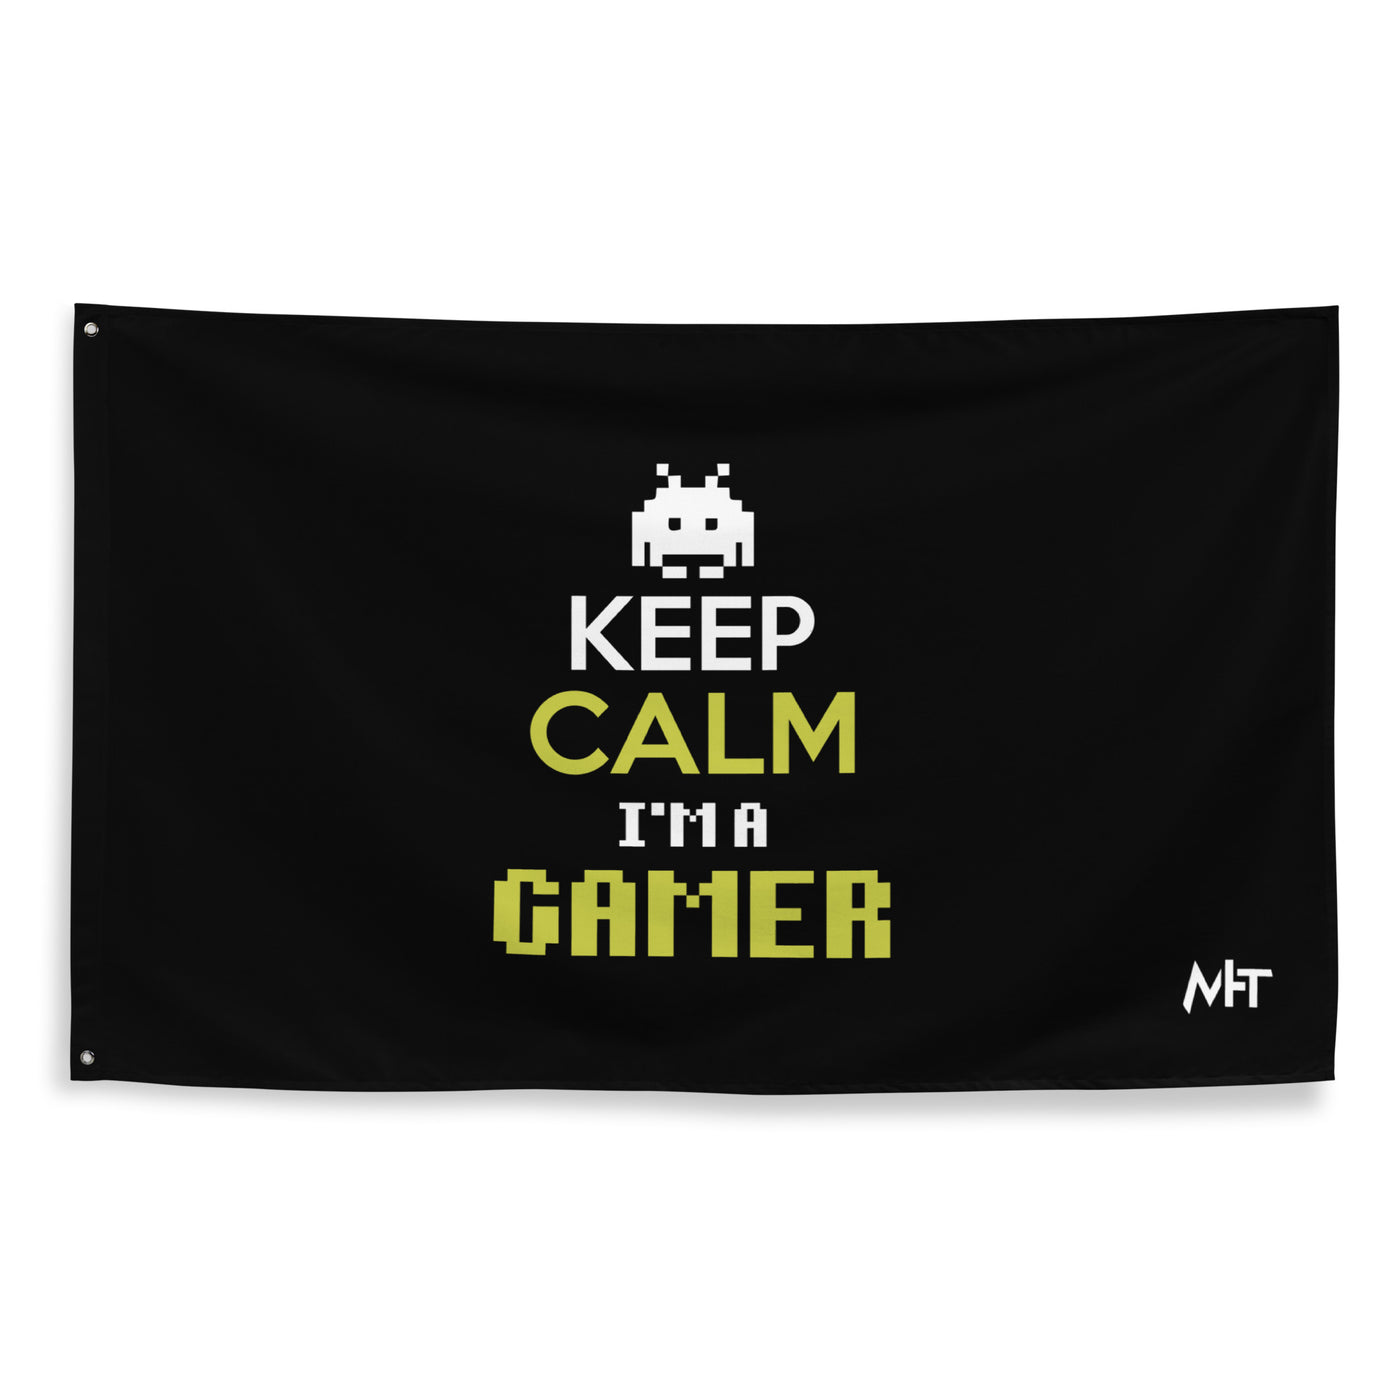 Keep Calm and I am a Gamer - Flag